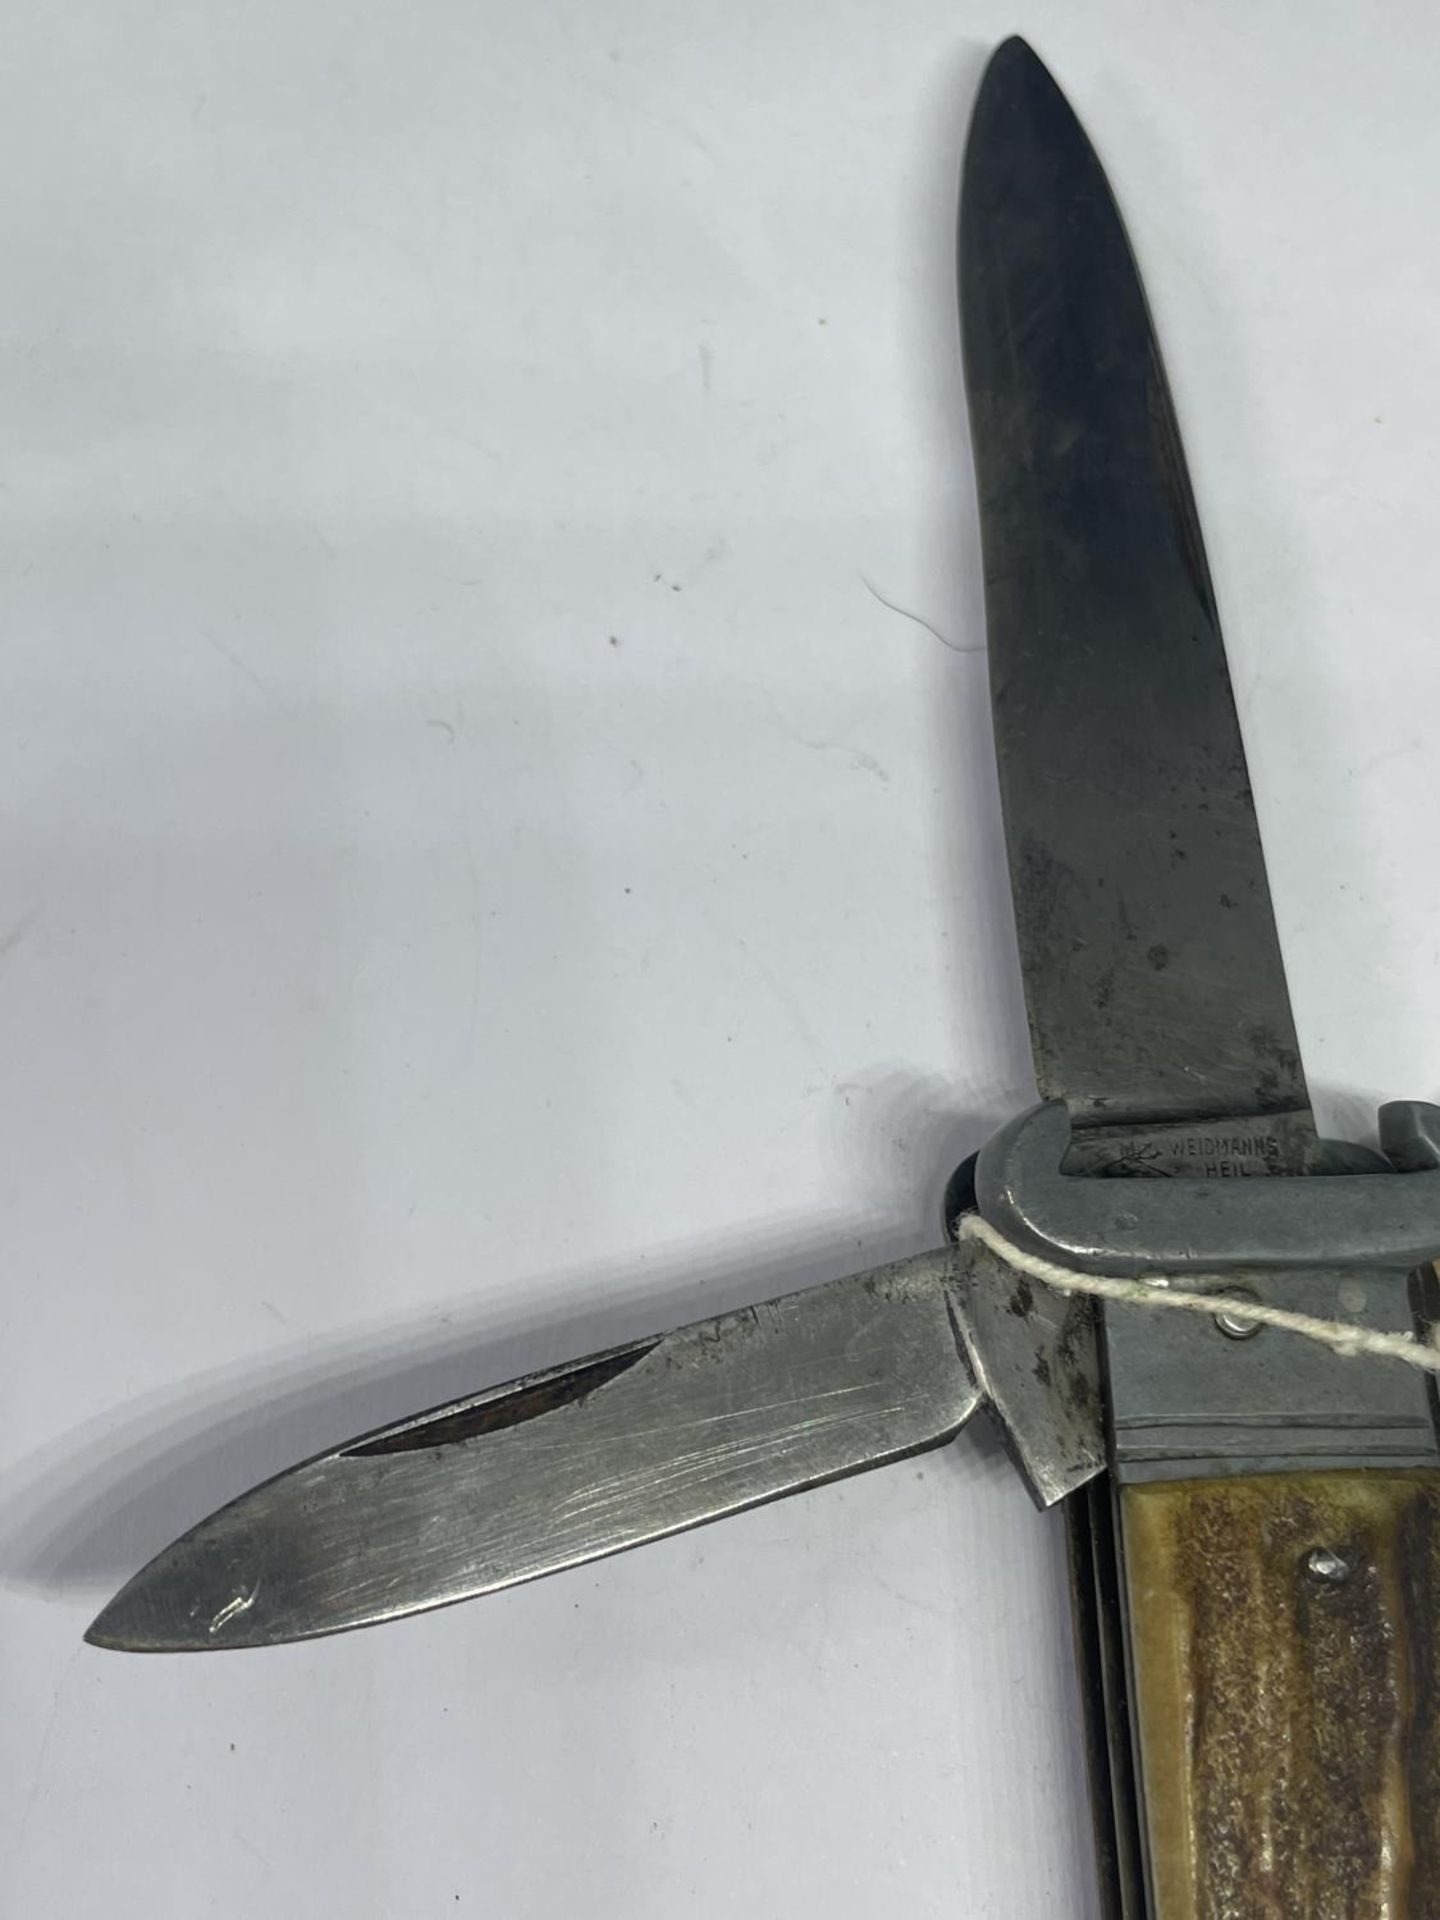 A WEIDMANNS HEIL SOLINGEN GERMANY KNIFE - Image 2 of 4